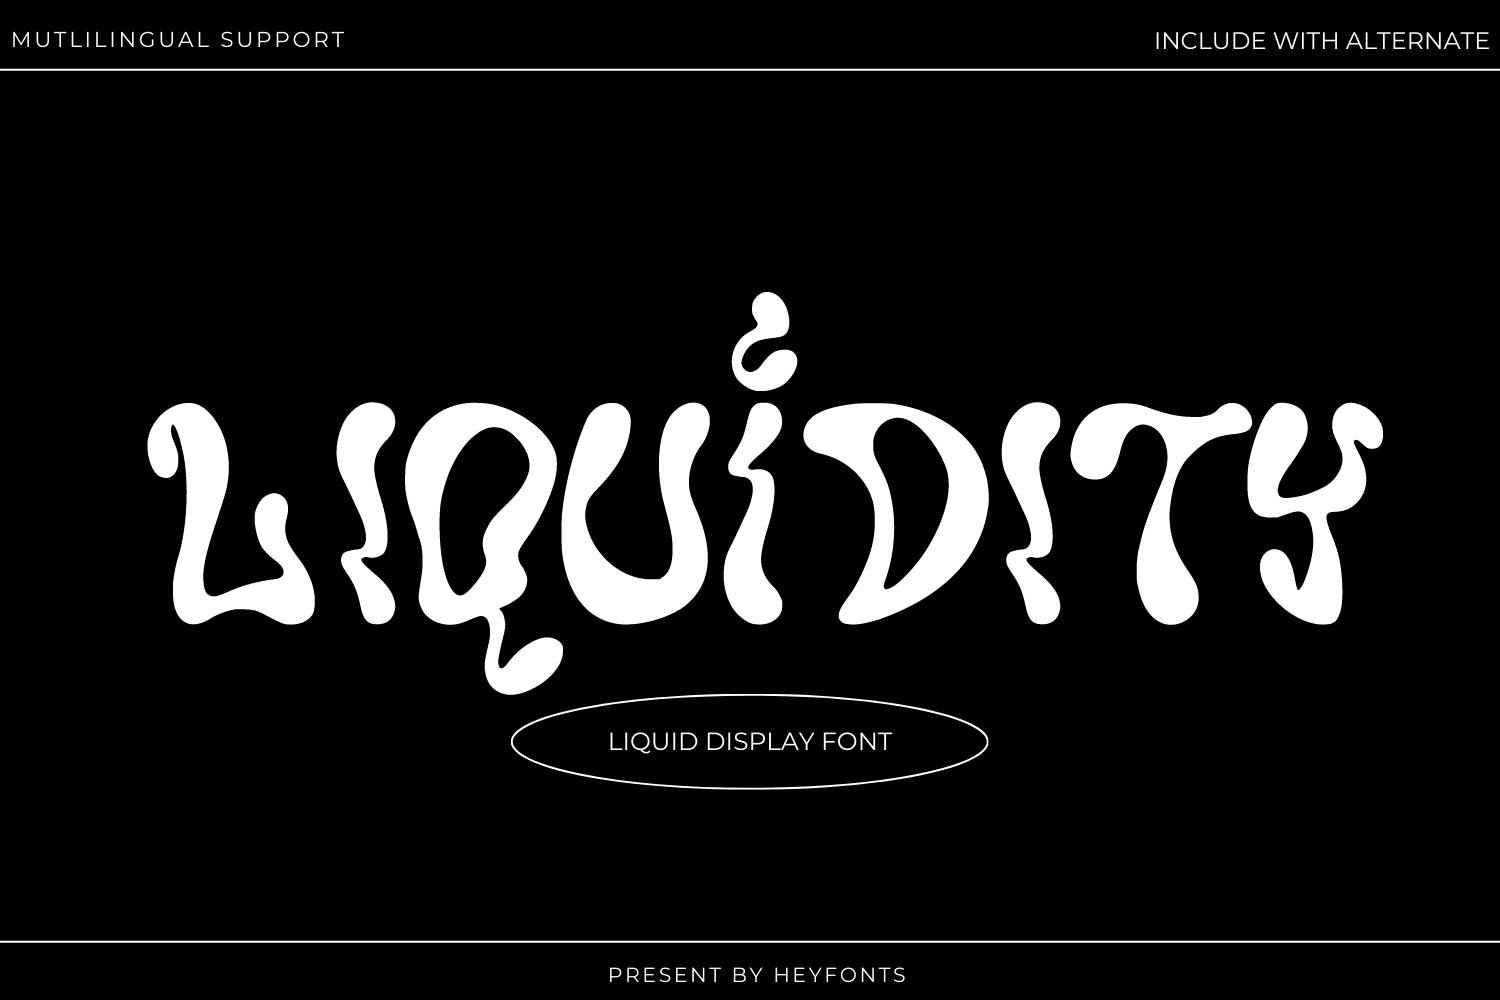 Liquifity - Liquid Display Font cover image.